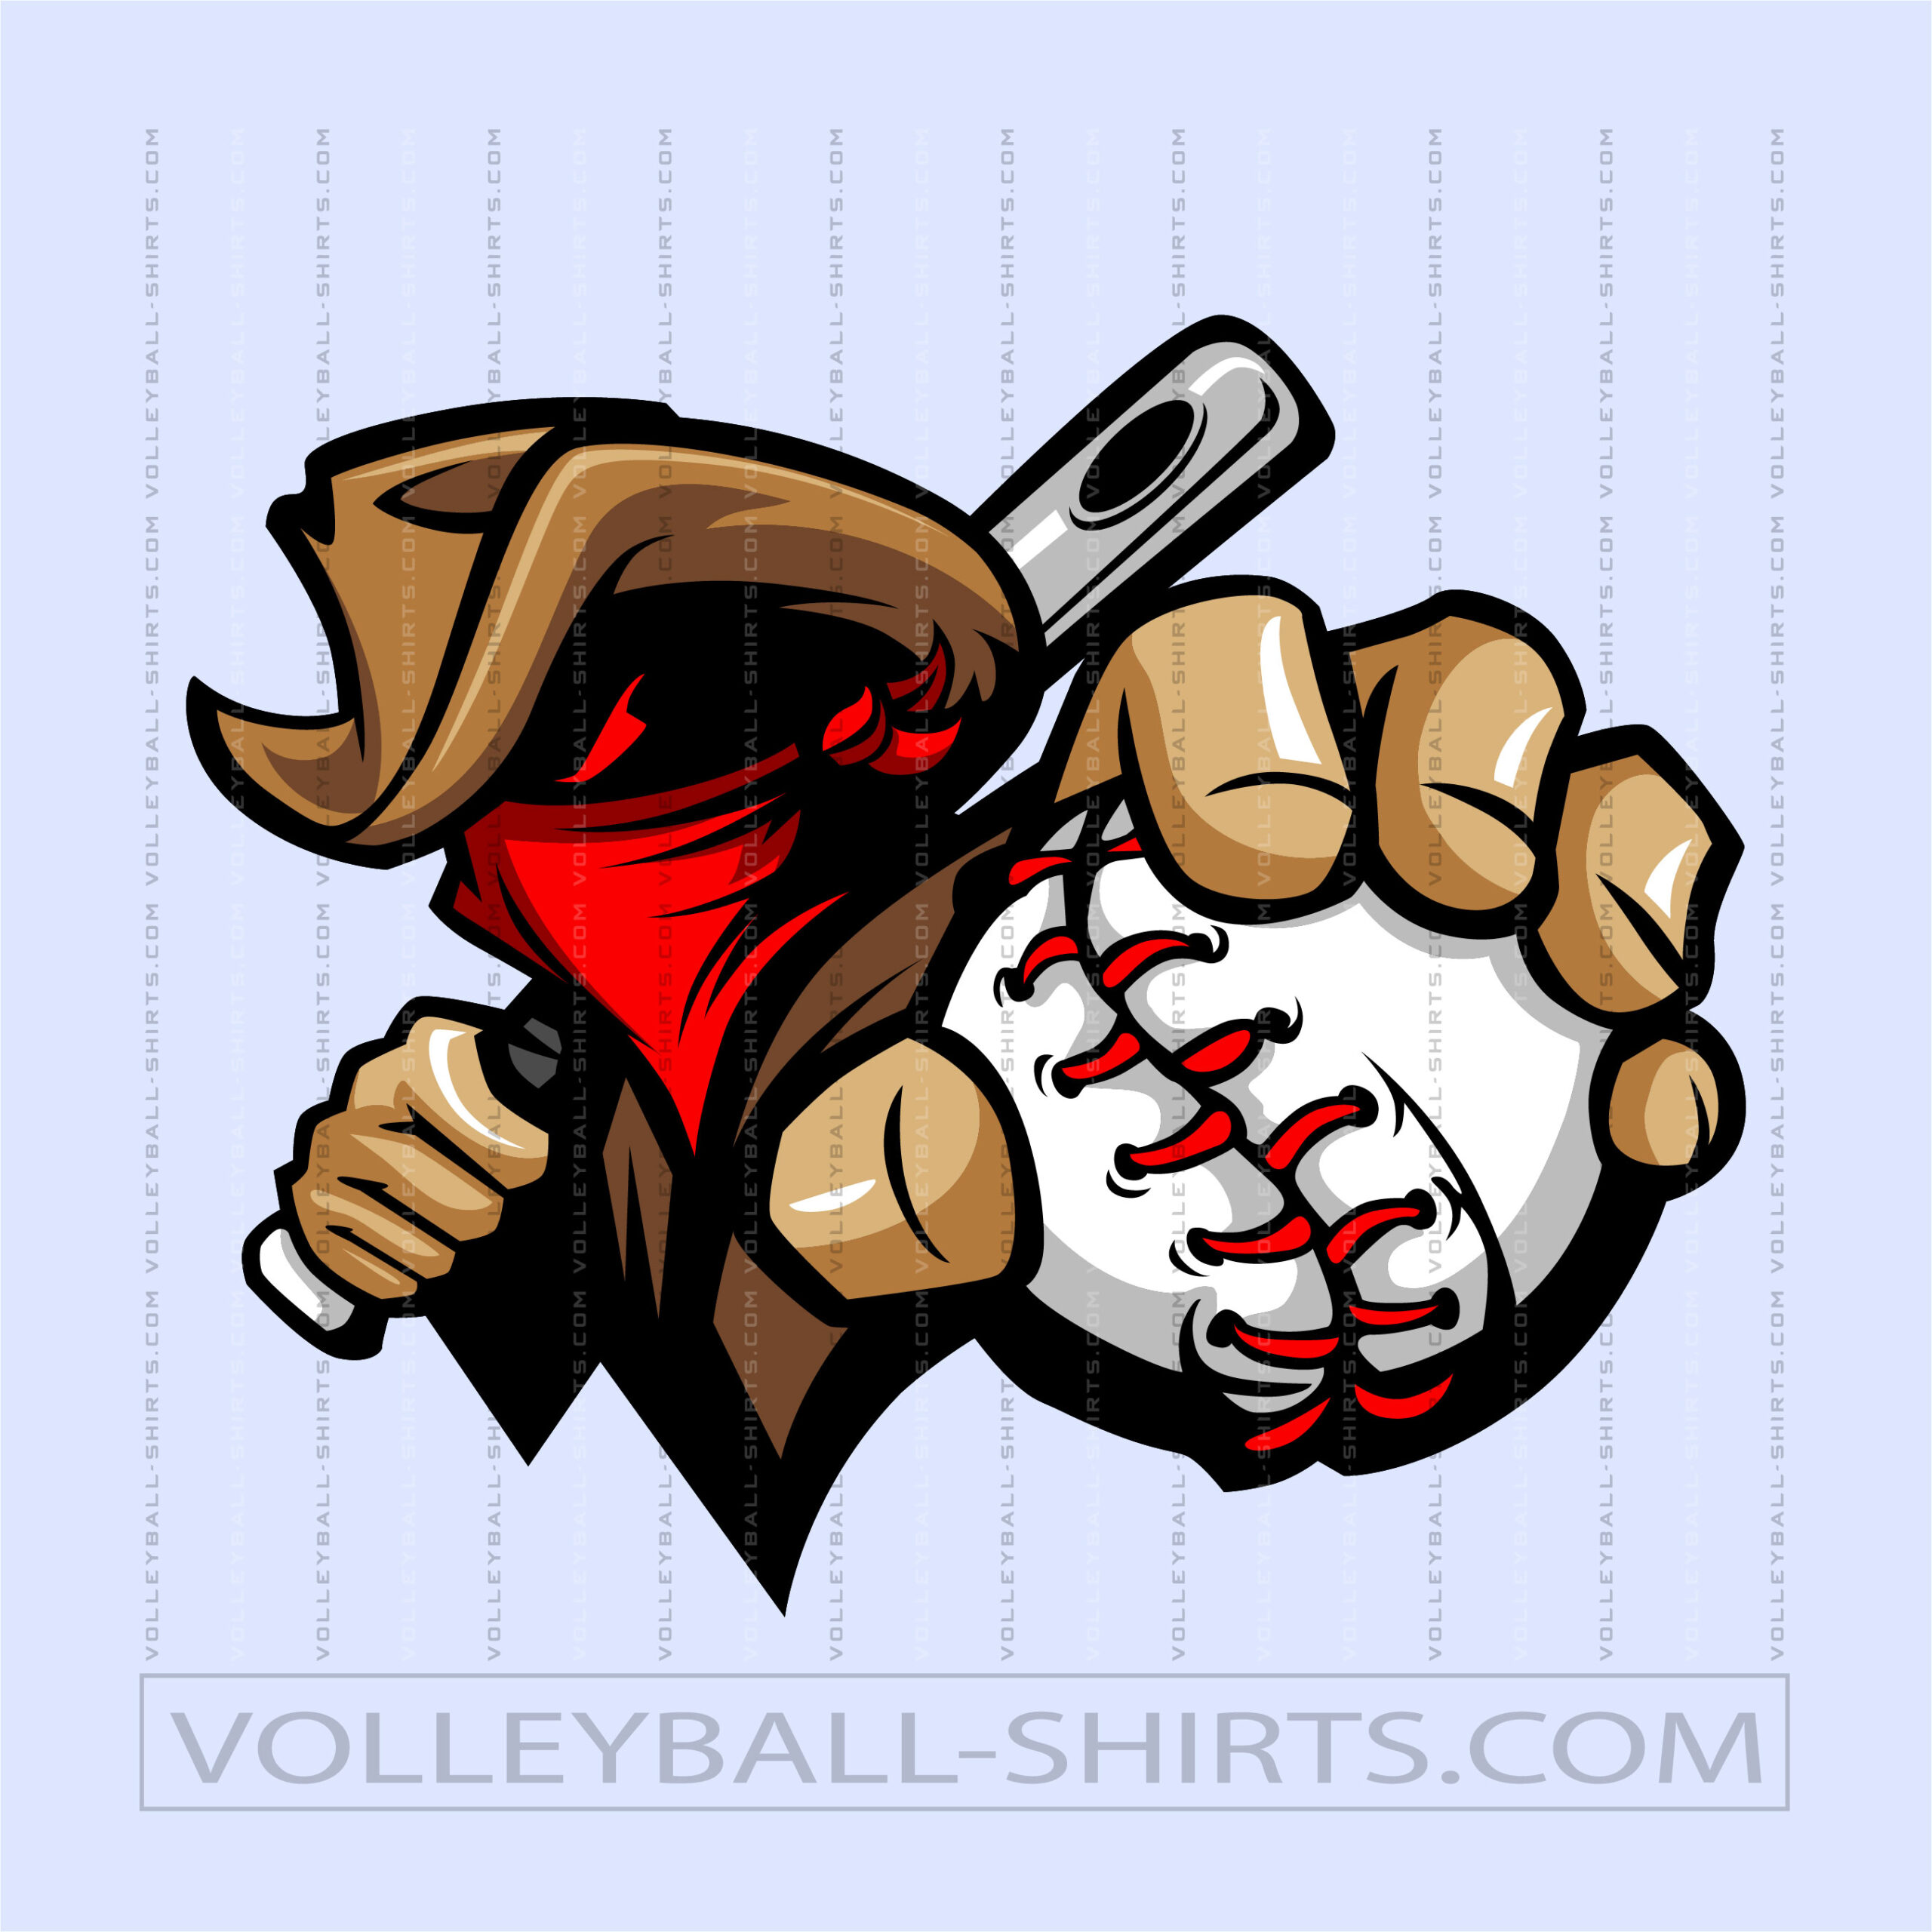 Renegades Baseball Logo